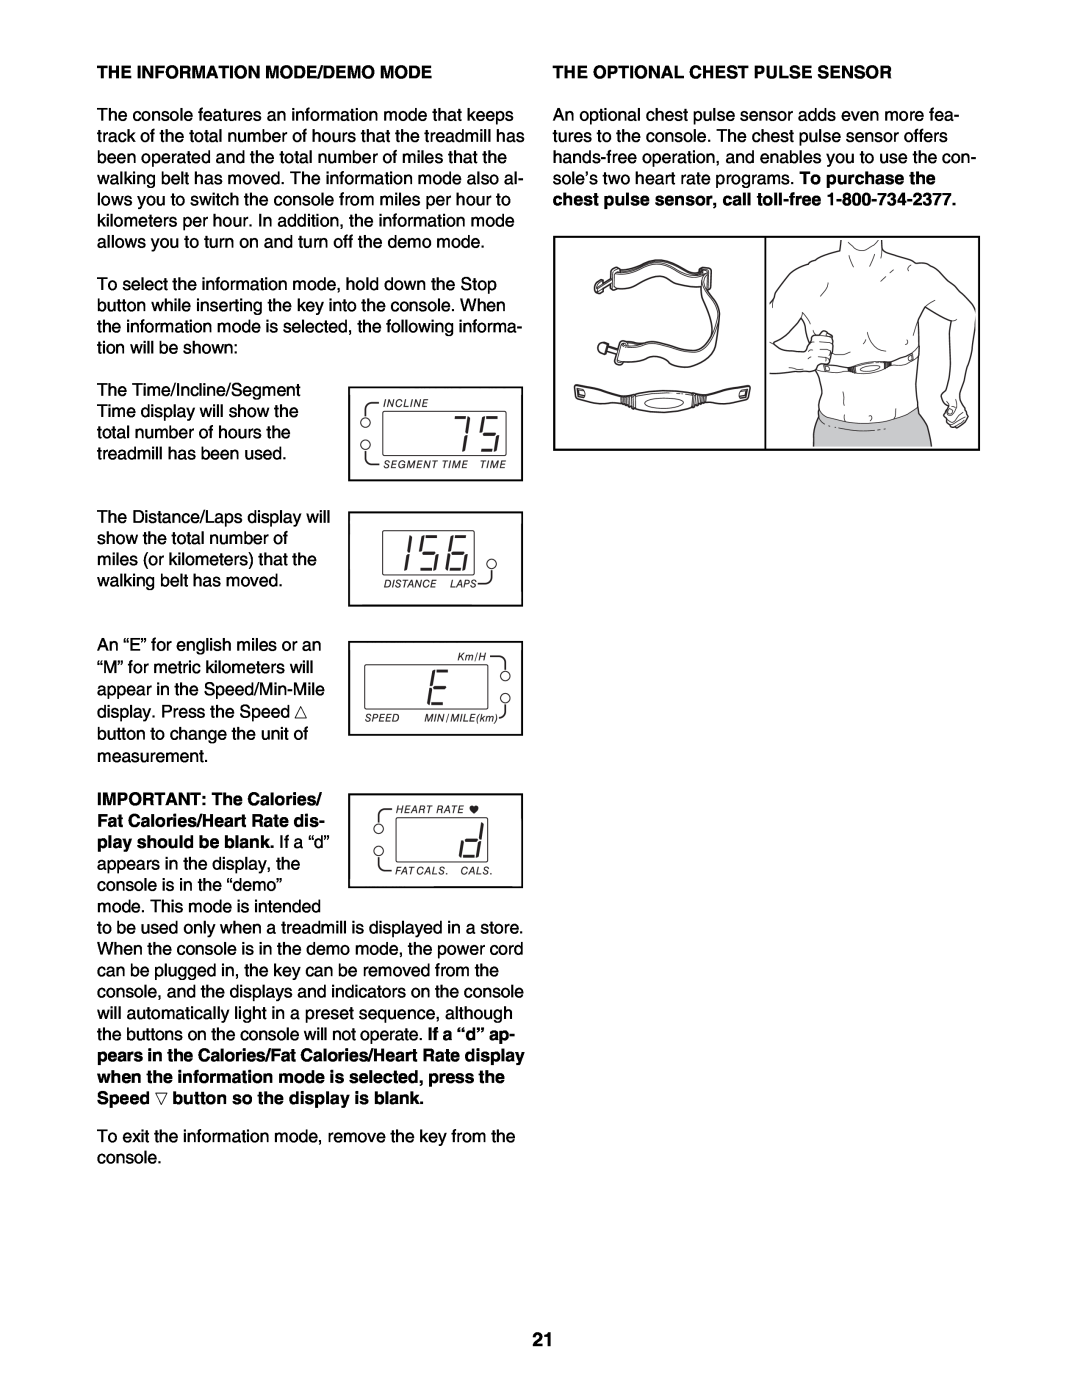 ProForm PFTL59023 user manual The Information Mode/Demo Mode, The Optional Chest Pulse Sensor 